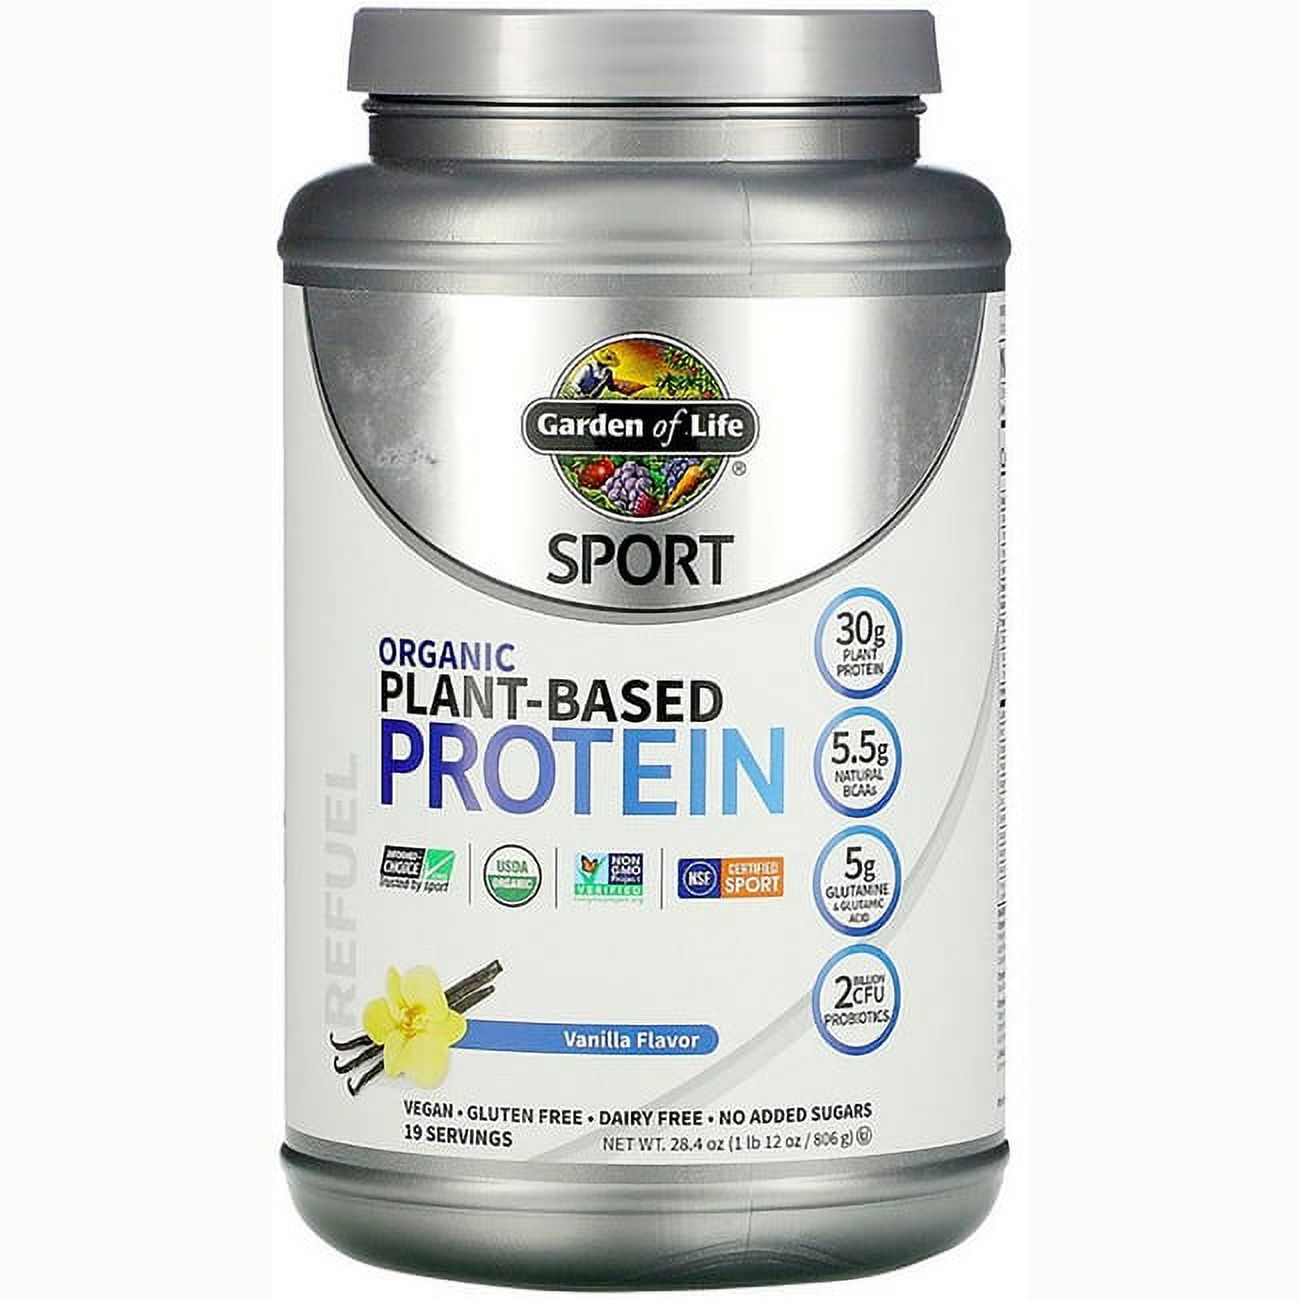 Garden of Life Sport Organic Plant-Based Protein Powder, Vanilla, 30g Protein, 1.8lb, 28.4oz - image 1 of 2